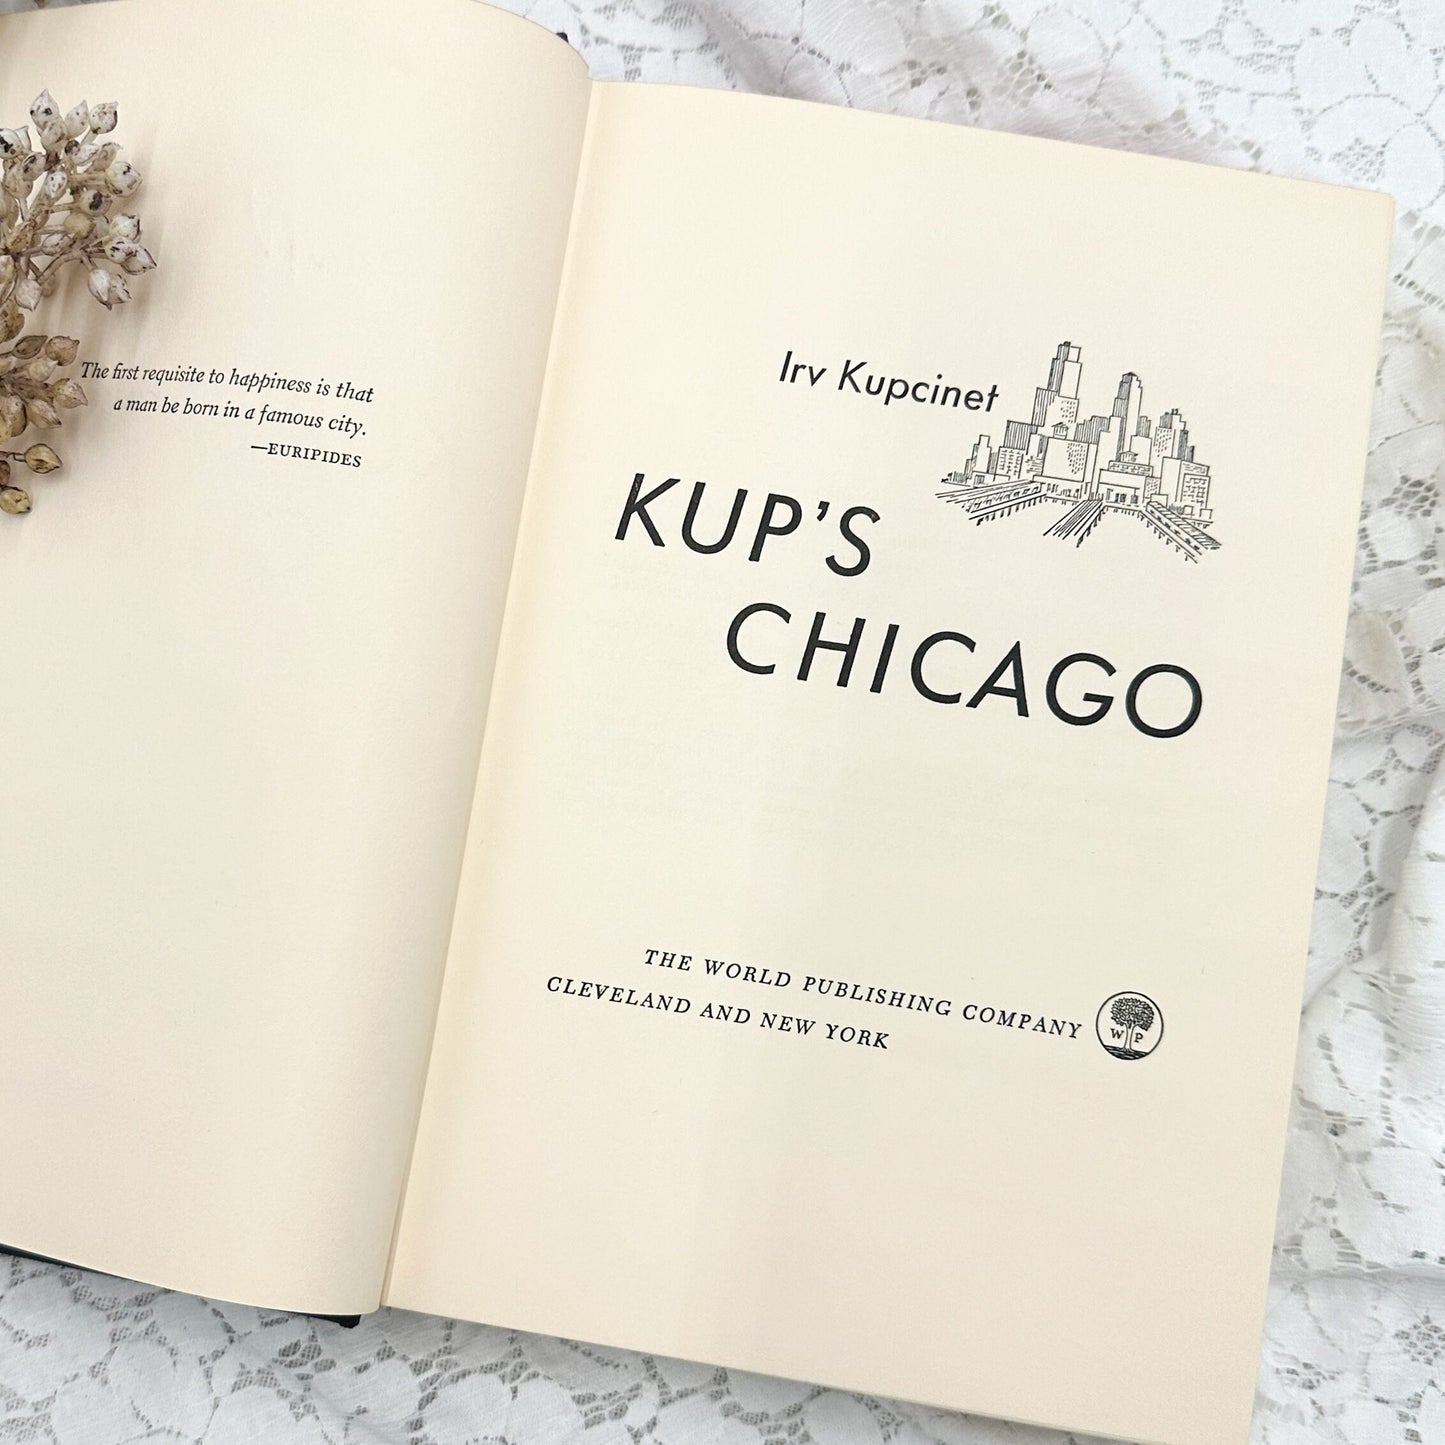 Kup's Chicago by Irv Kupcinet